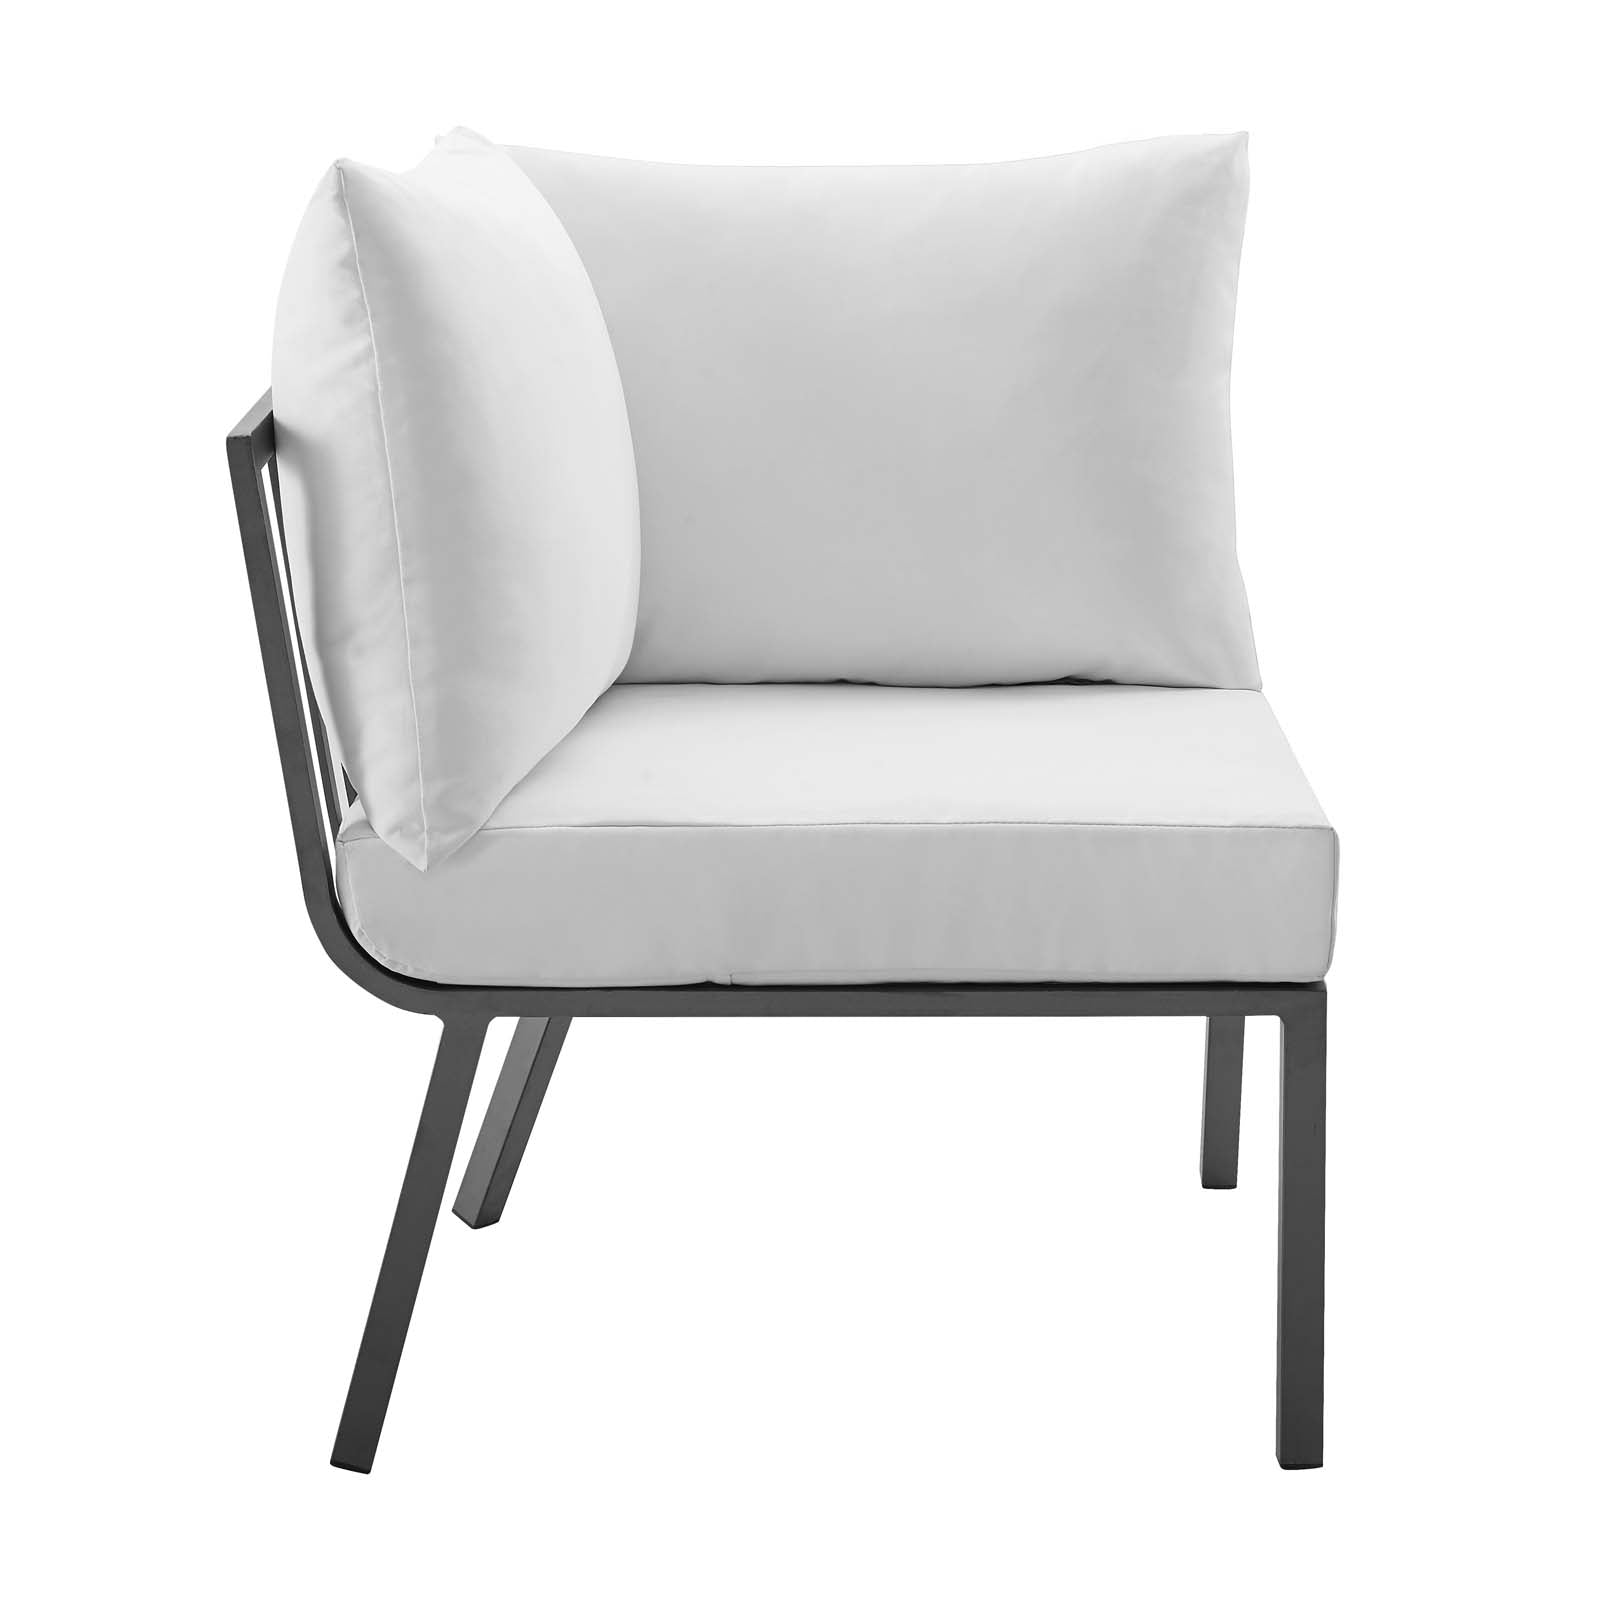 Riverside Outdoor Patio Aluminum Corner Chair Gray White